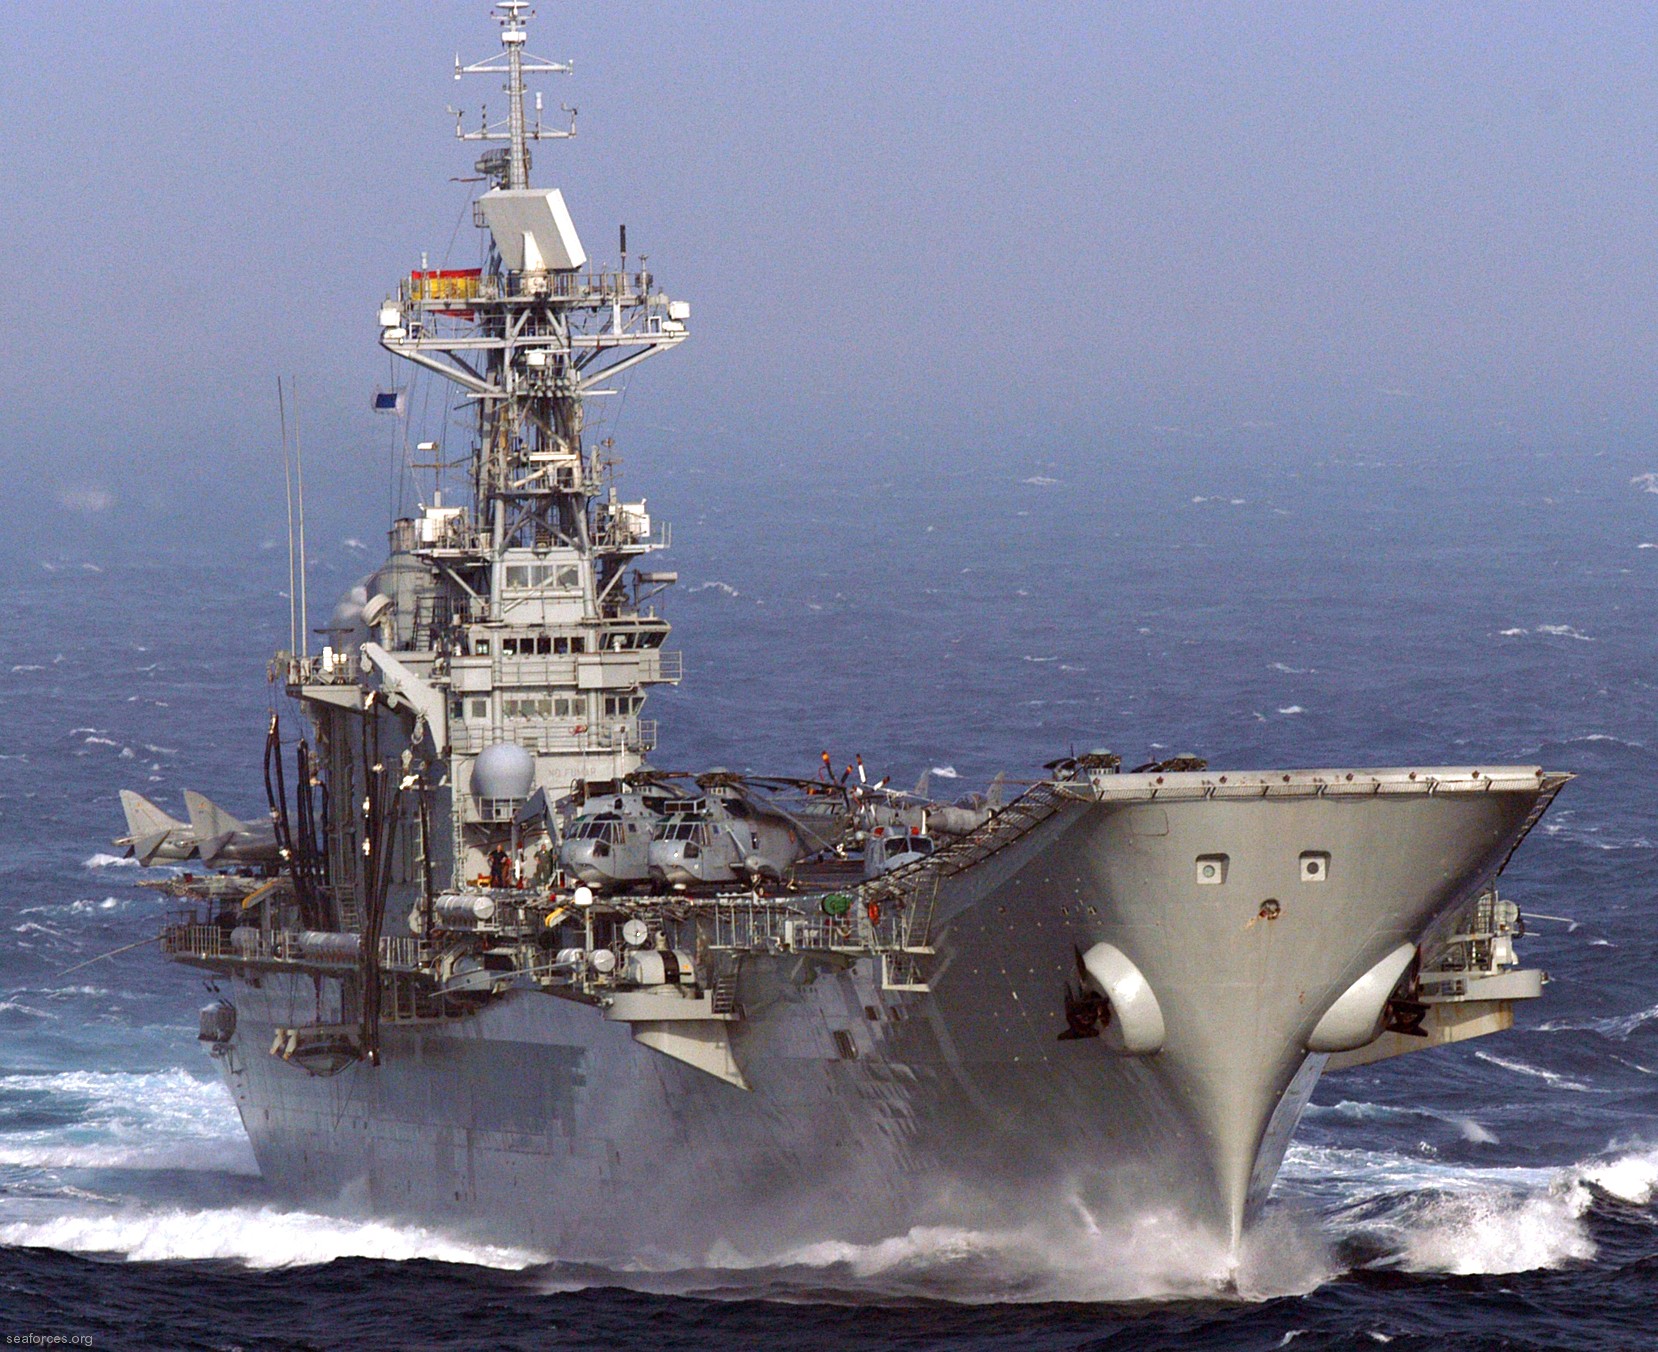 r-11 sps principe de asturias aircraft carrier vstol spanish navy 07